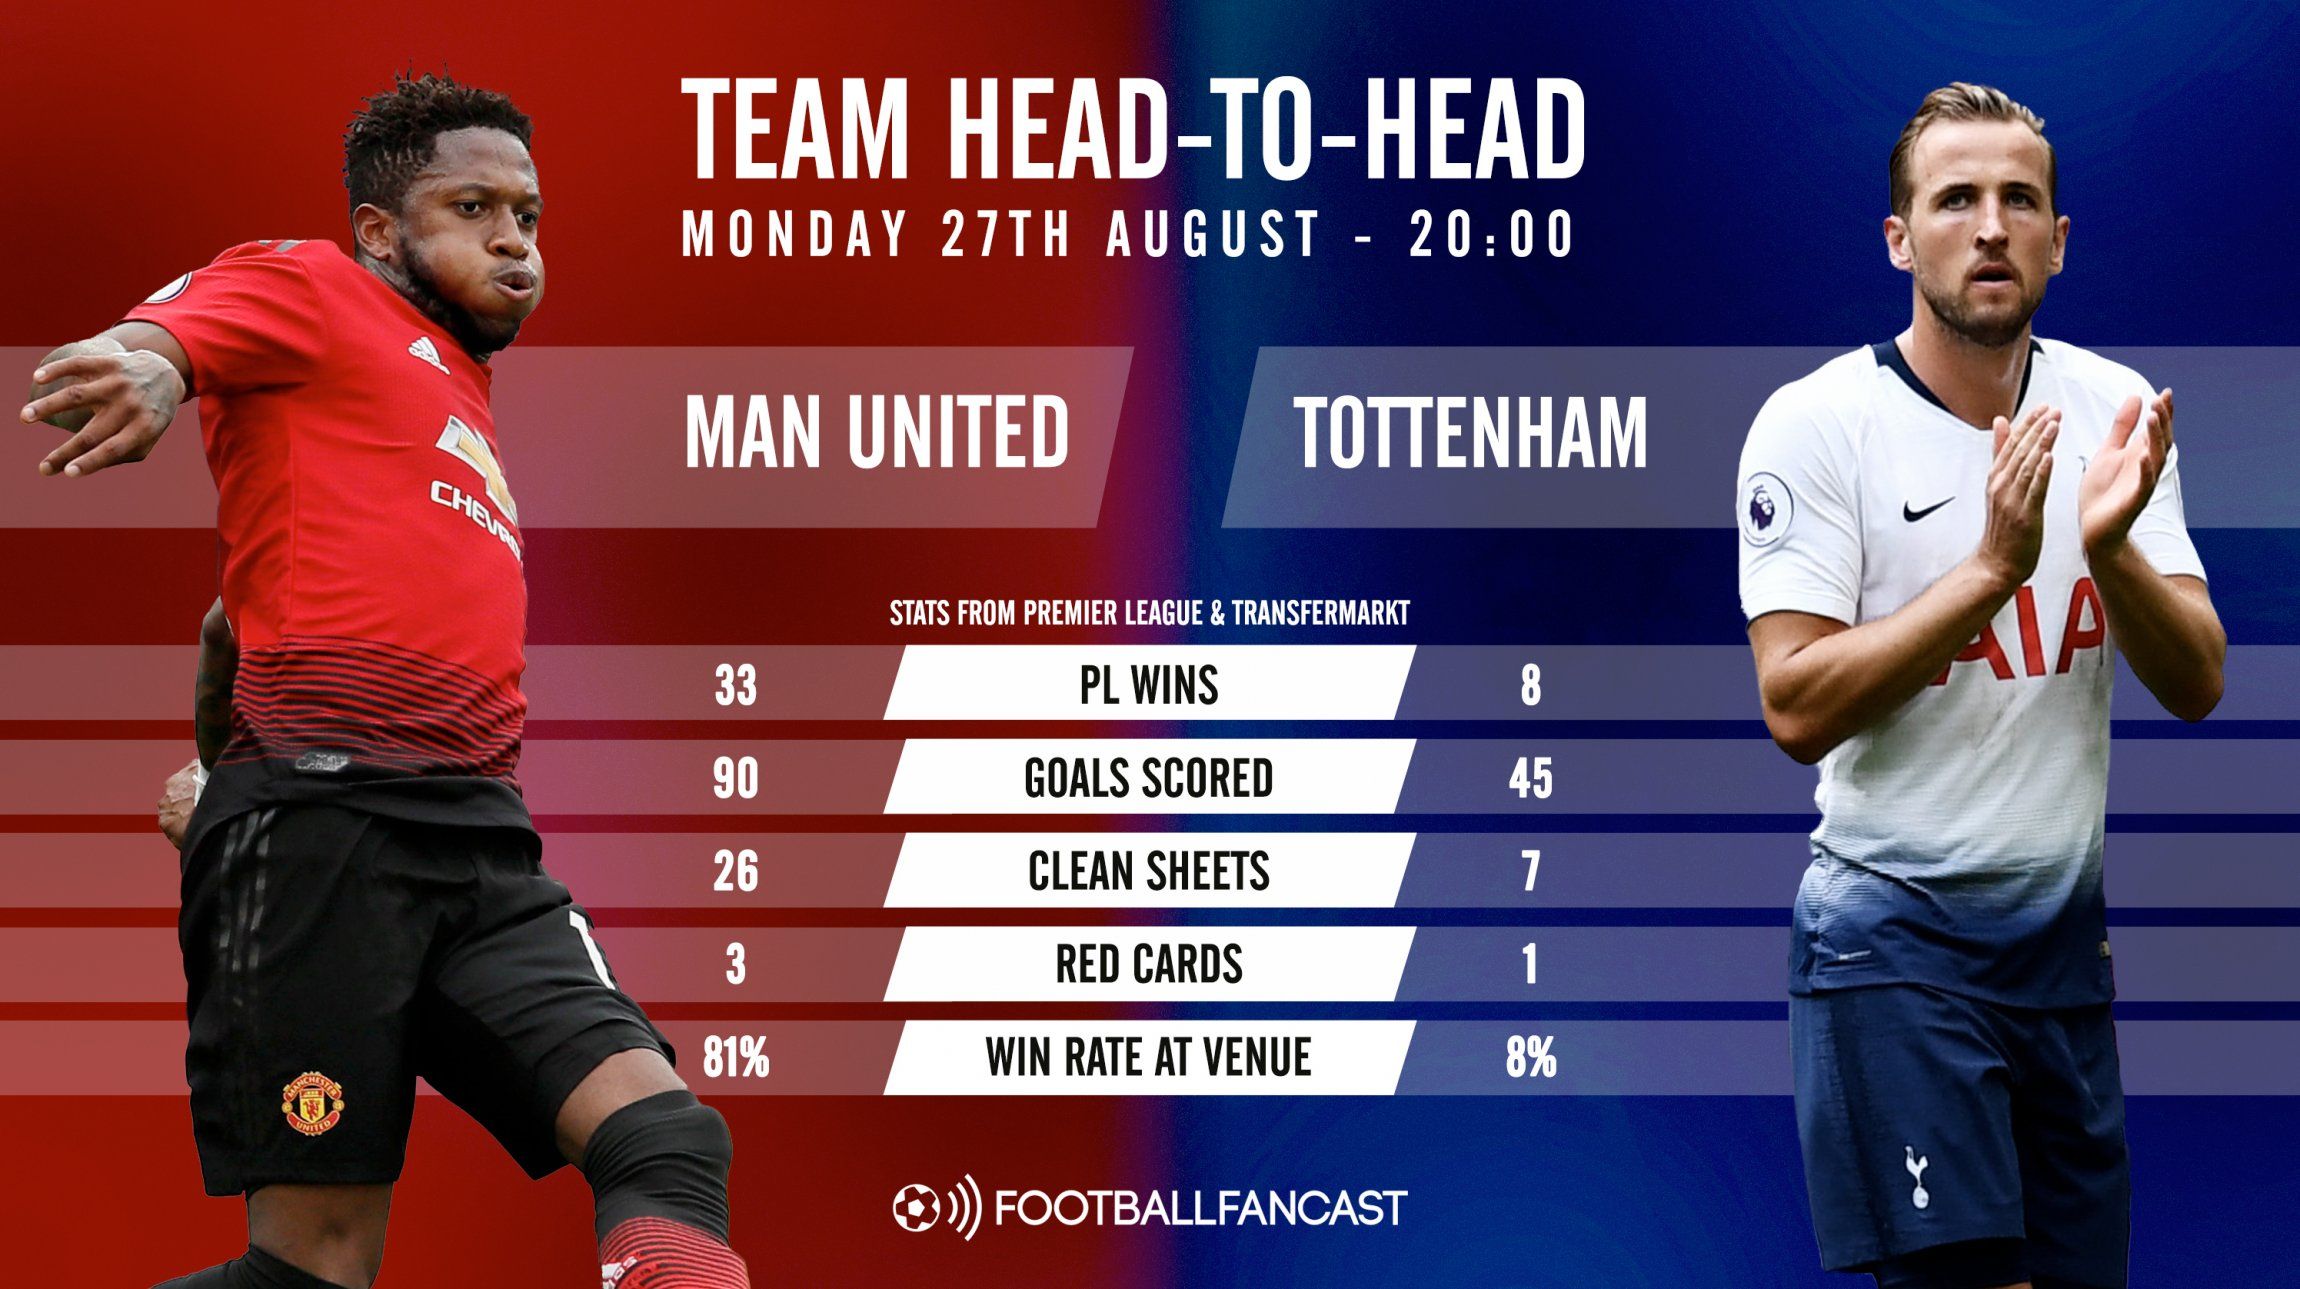 Man United vs Tottenham - Head-to-Head